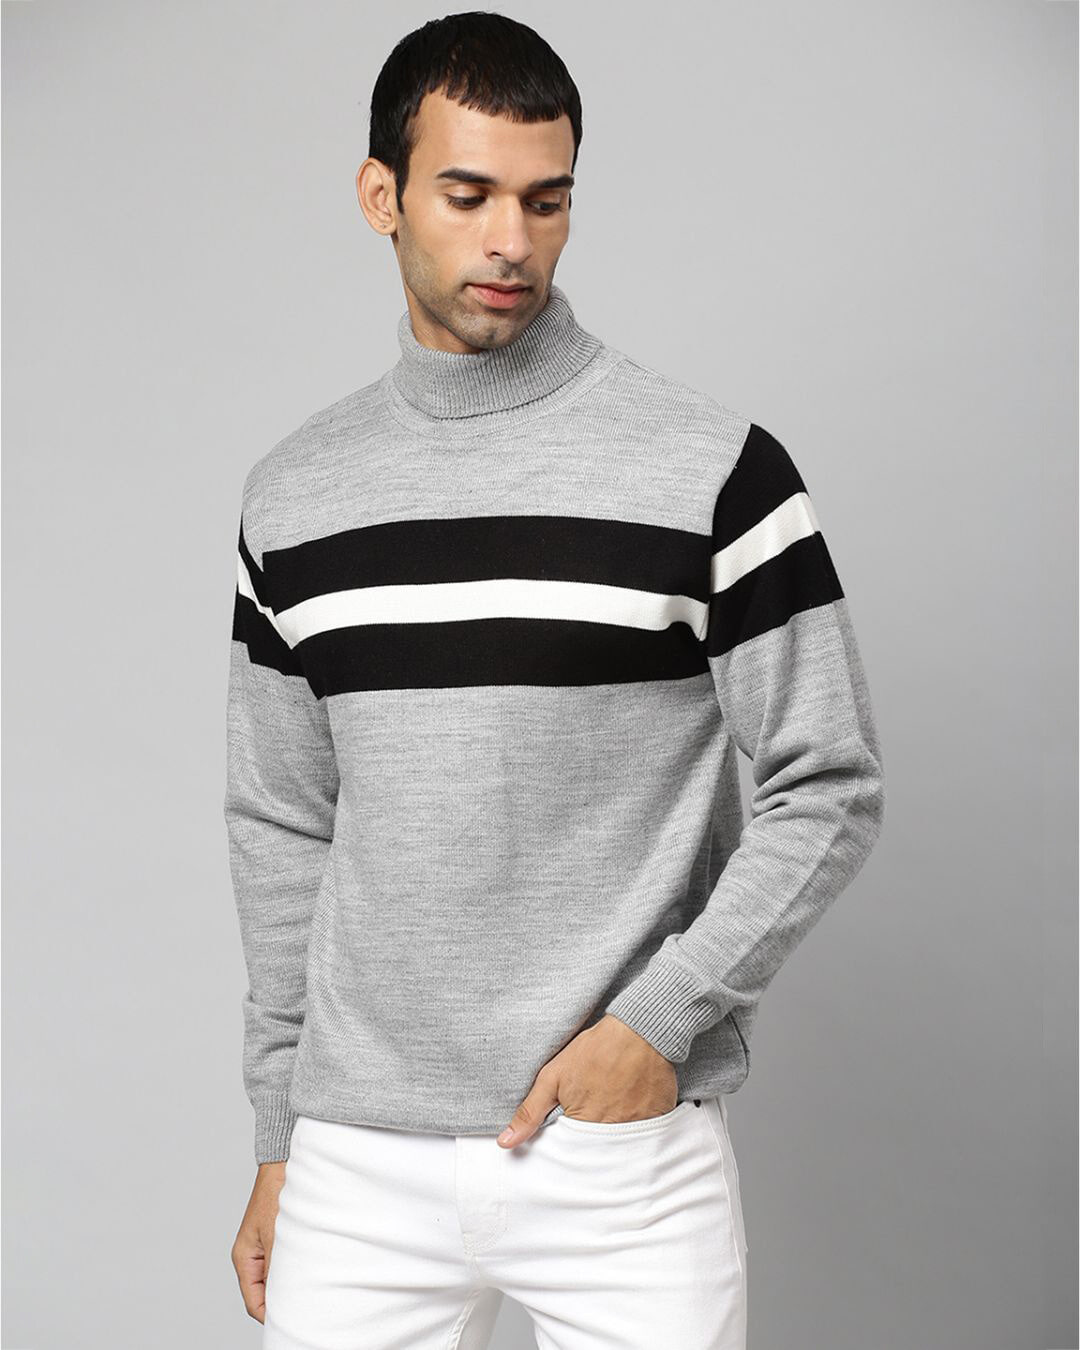 Buy Men's Grey & Black Stylish Striped Casual Sweater Online at Bewakoof